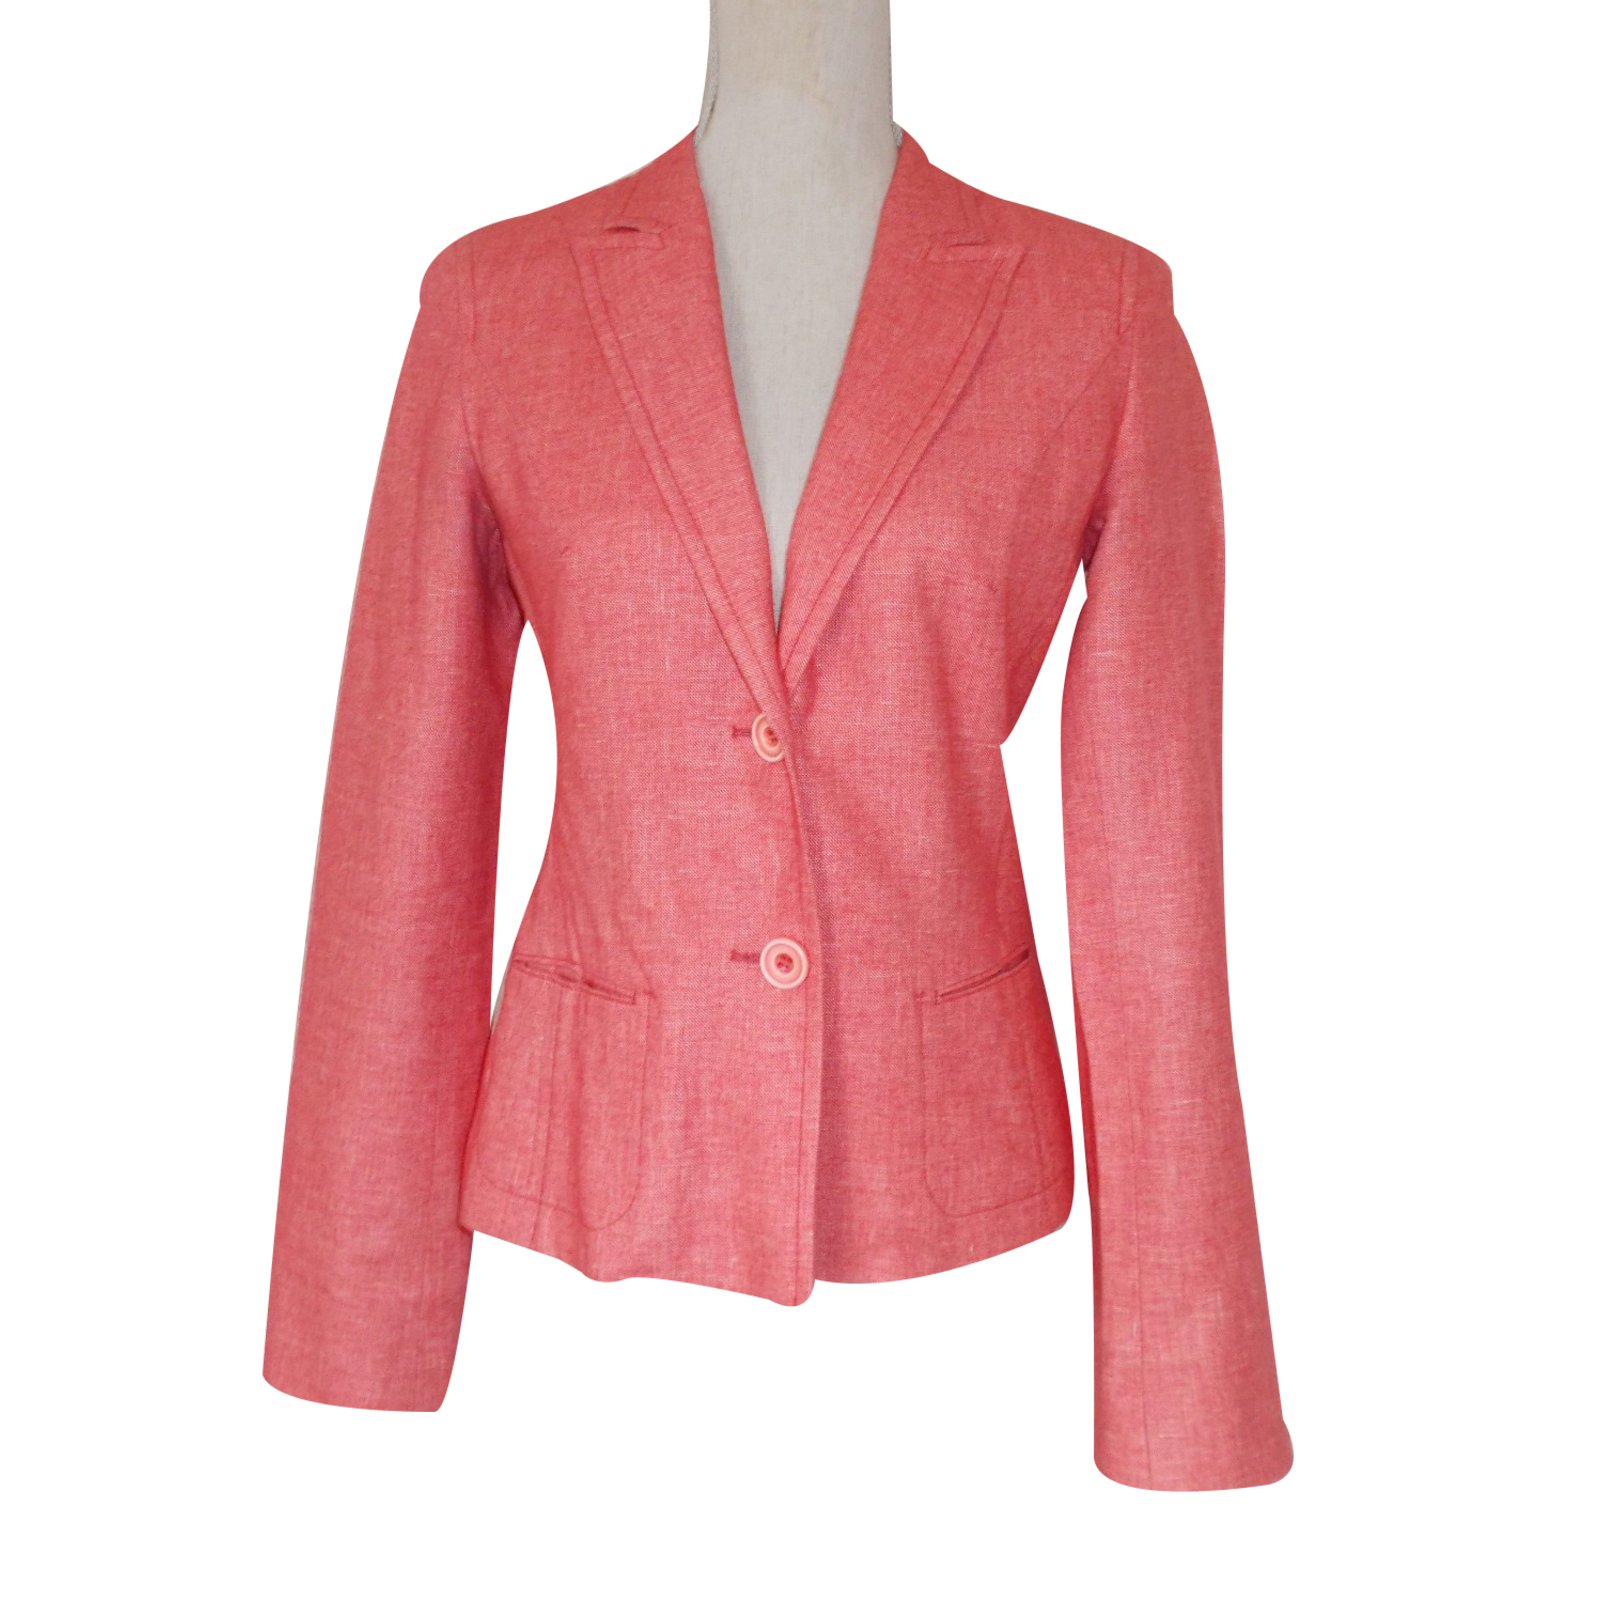 REN/É LEZARD Womens Suit Jacket